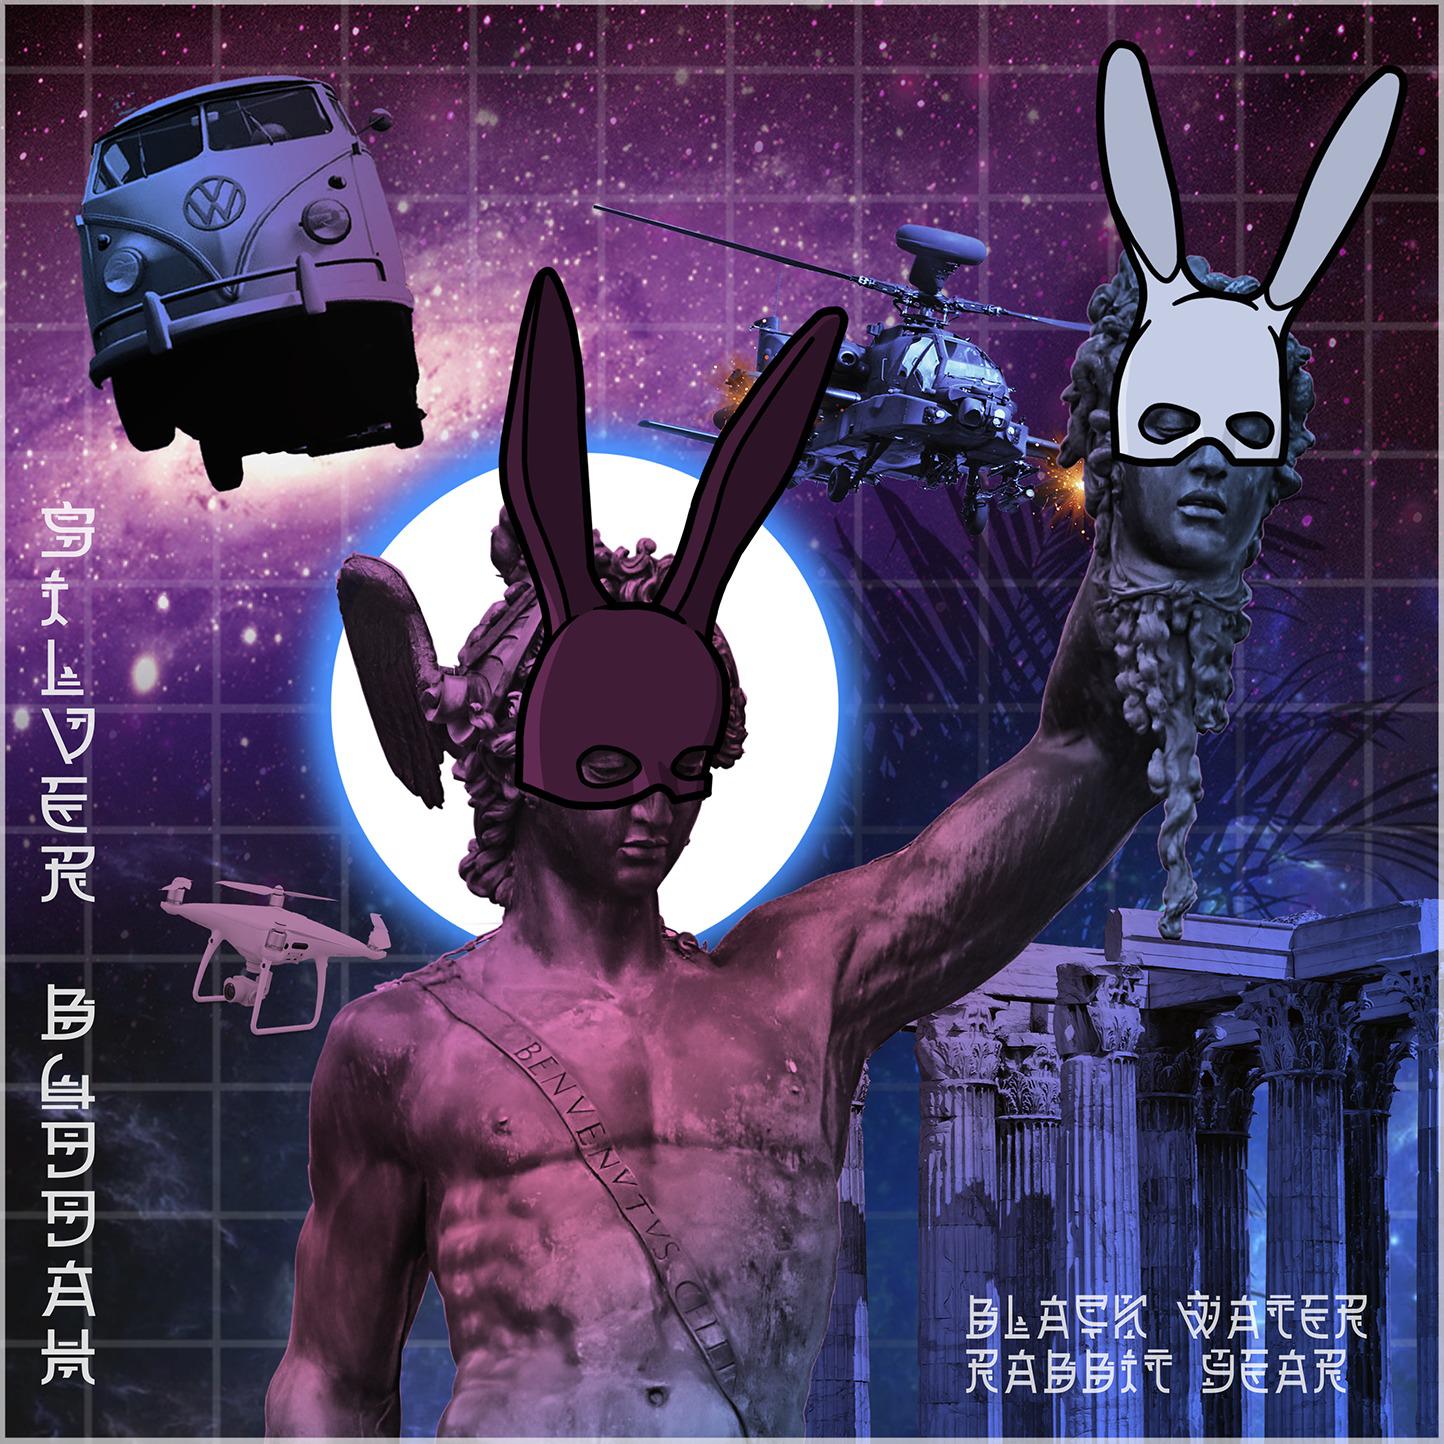 Постер альбома Black Water Rabbit Year